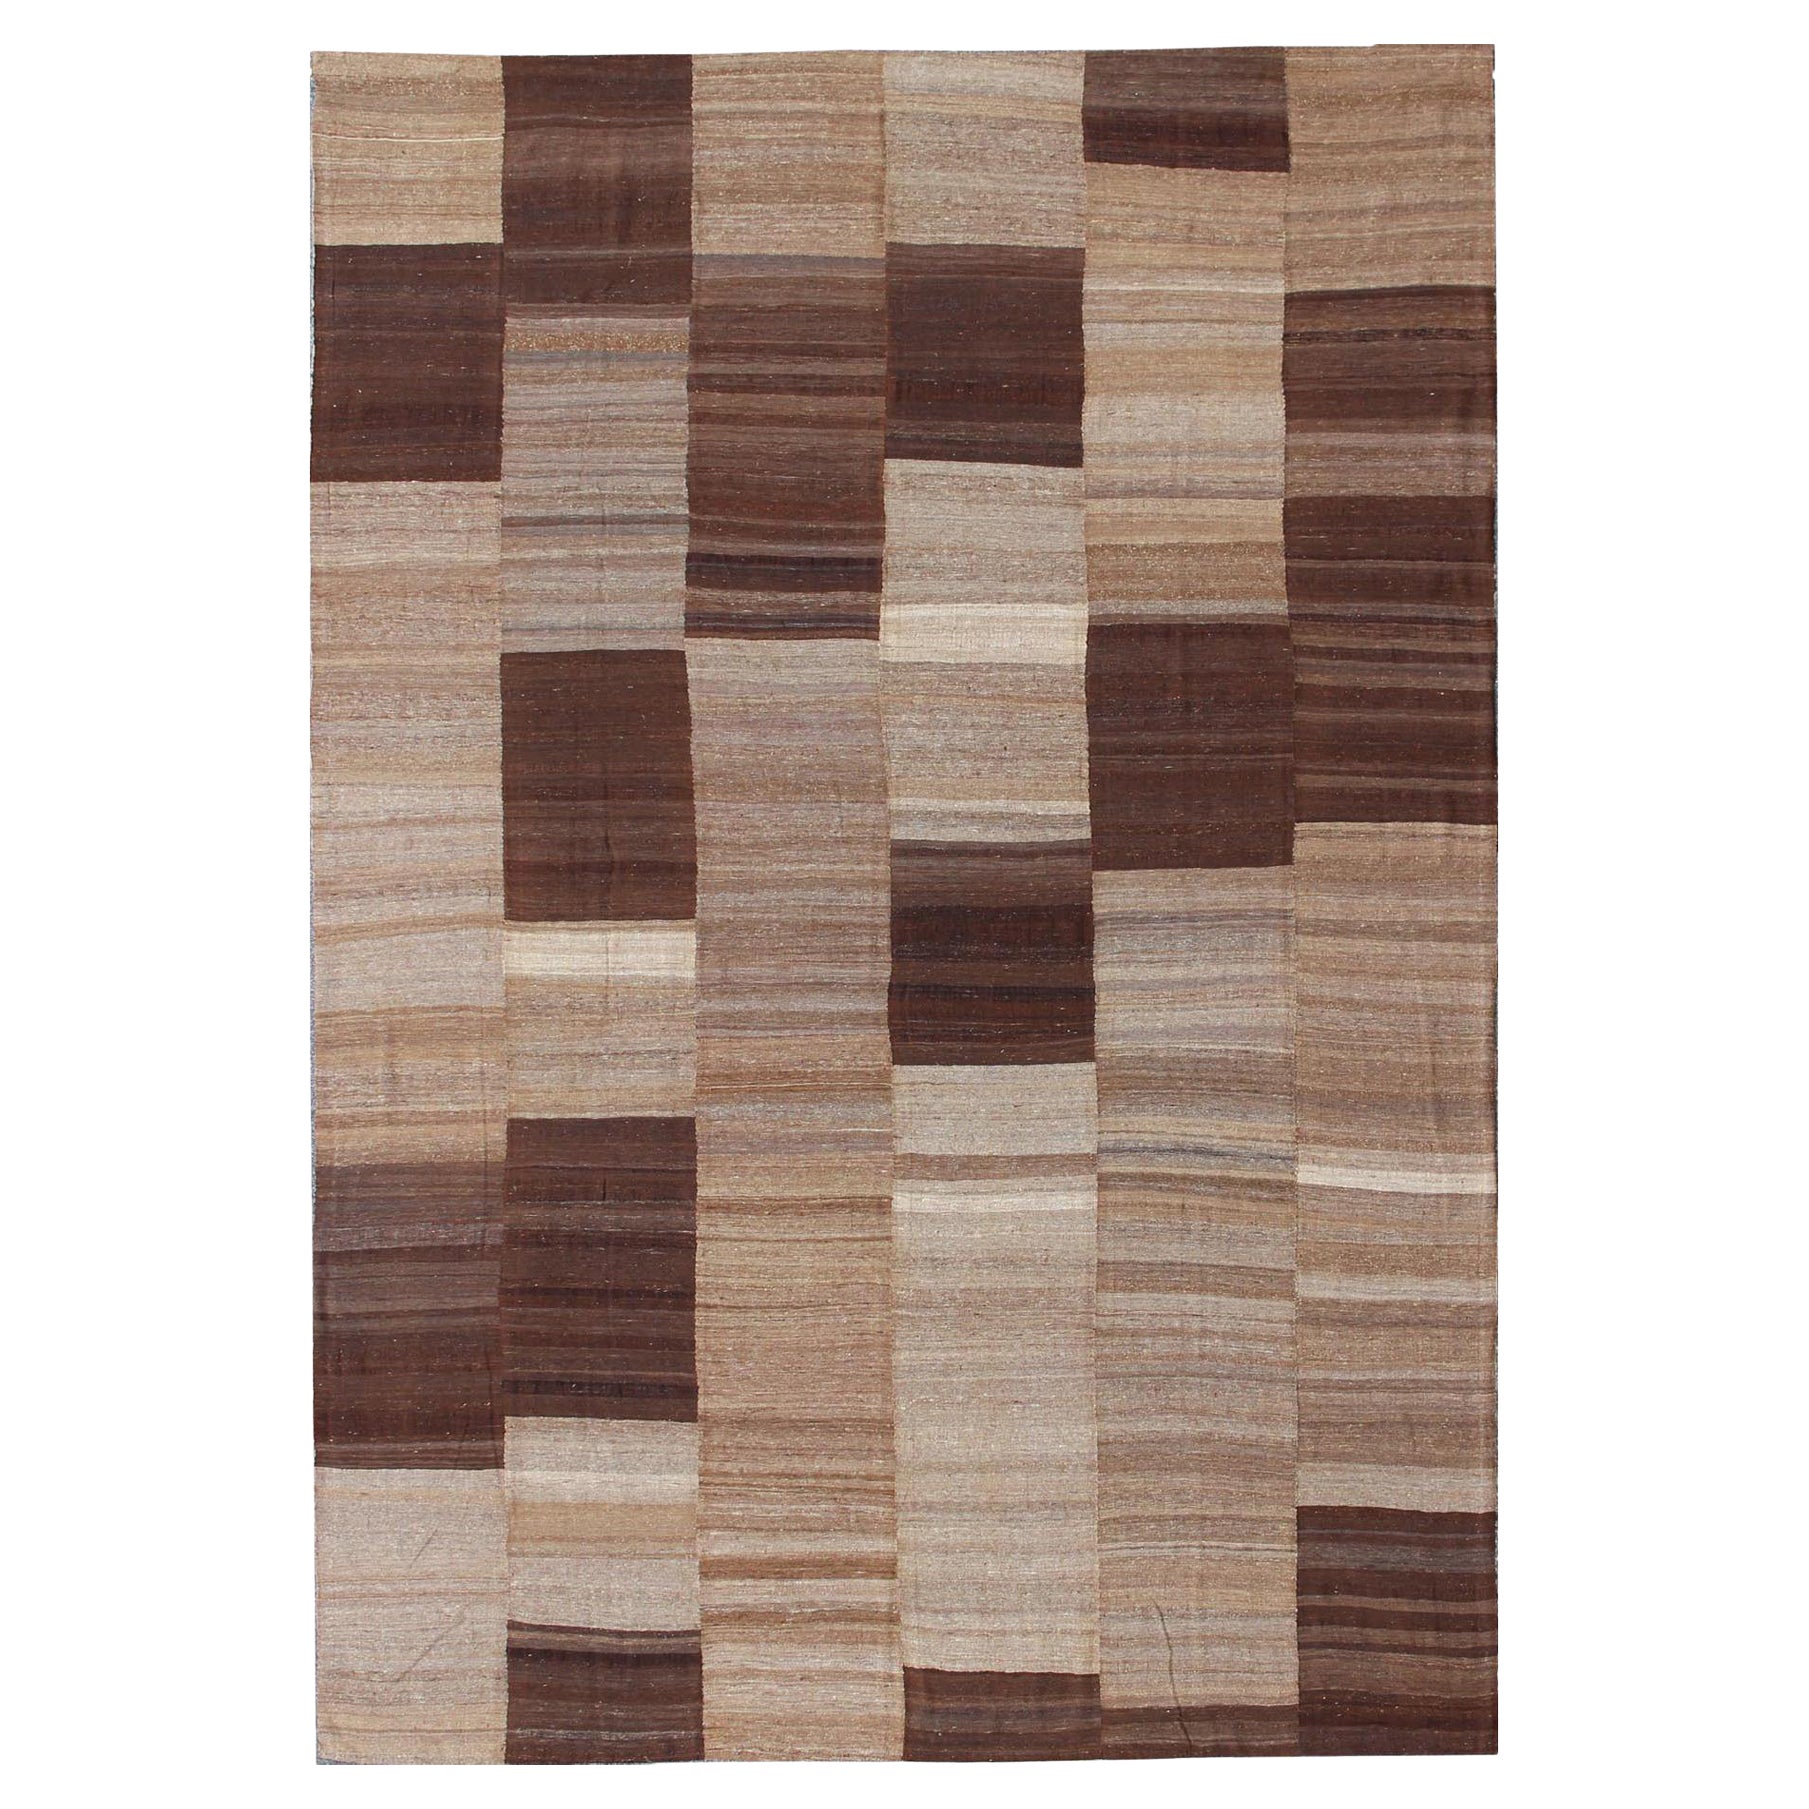 Large Flat Weave Kilim in Six Panels of Dark Brown, Light Brown, Taupe & Khaki